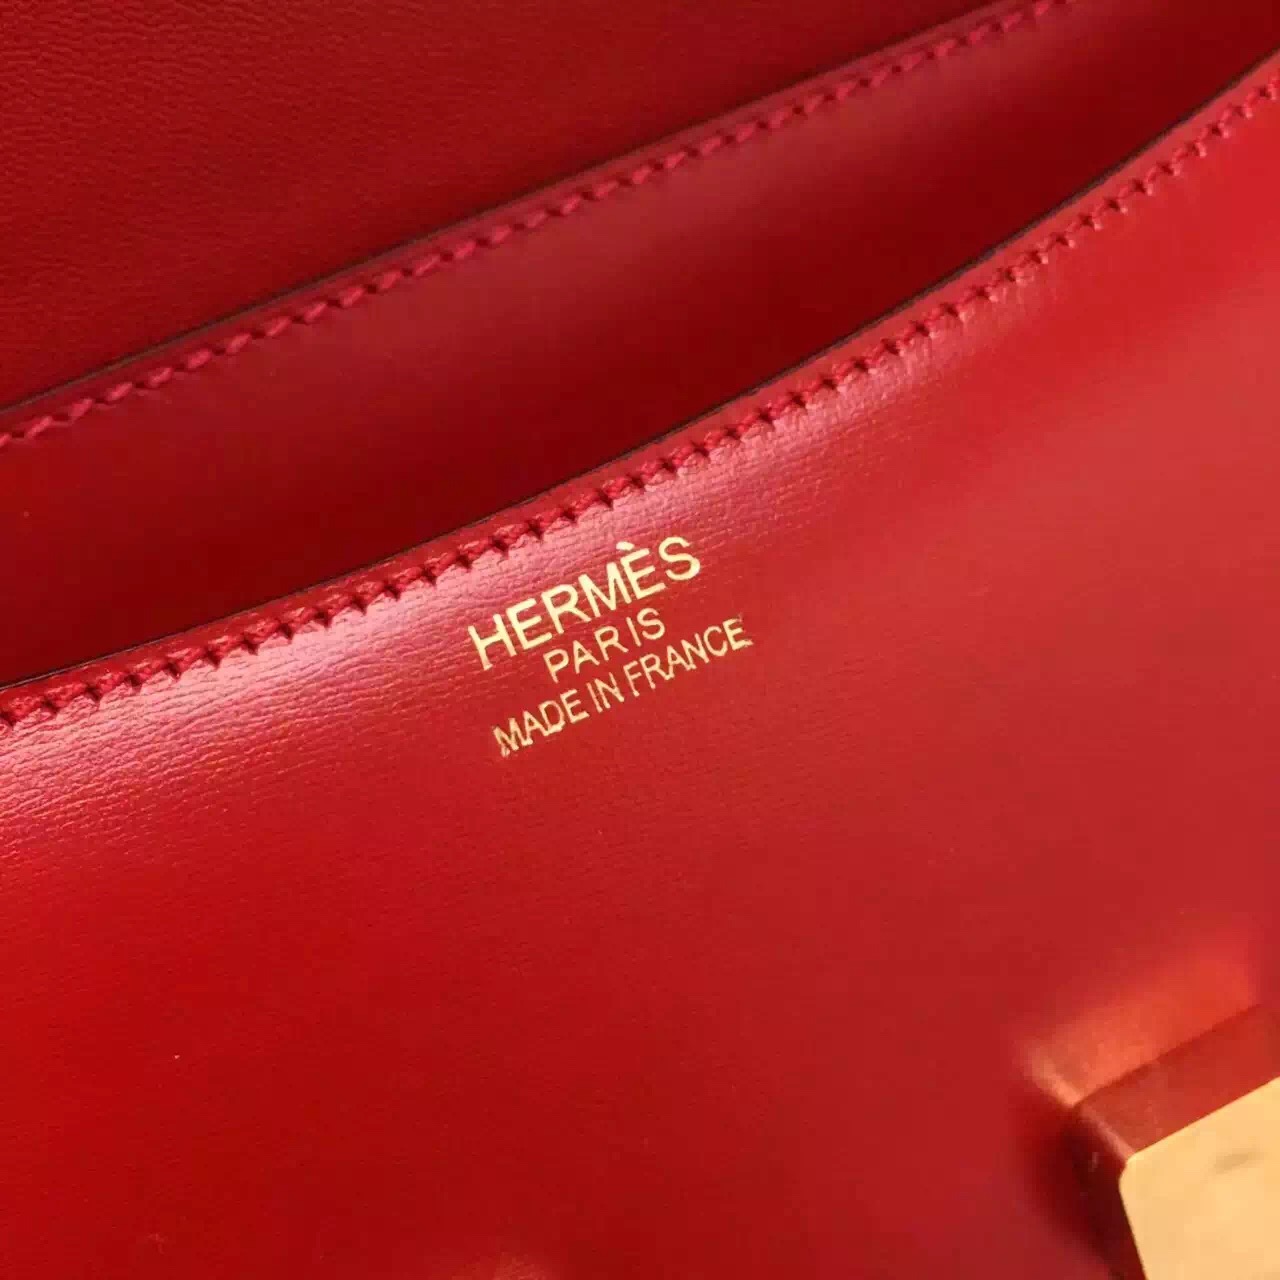 Hermes original box leather constance bag C023 red